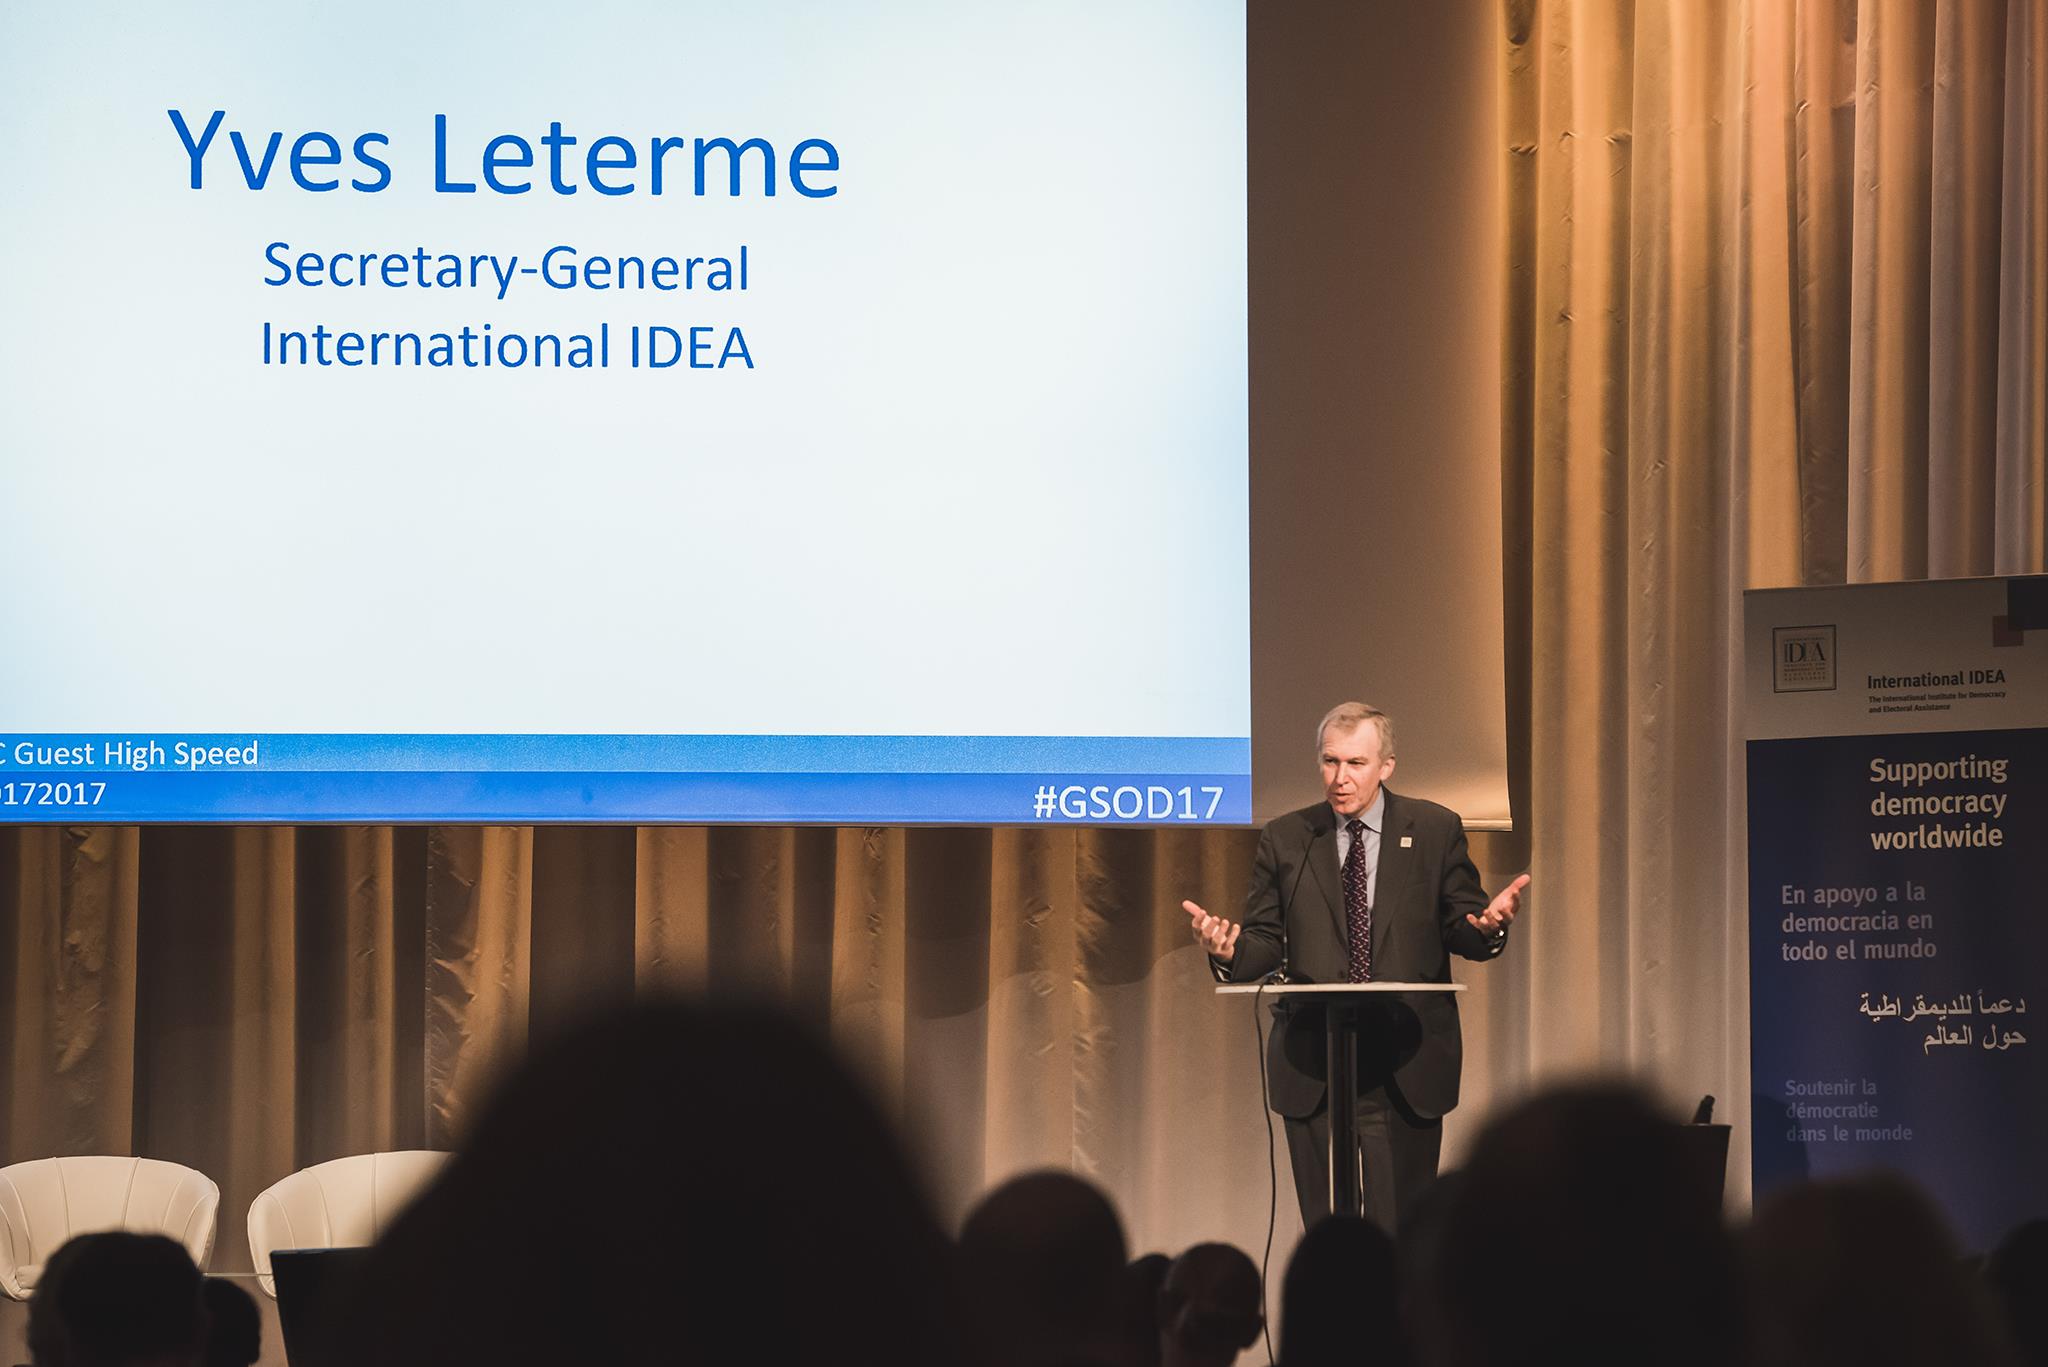 Secretary-General Yves Leterme at The Global State of Democracy launch, Stockholm, 15 November 2017. Image: Stuudio Huusmann